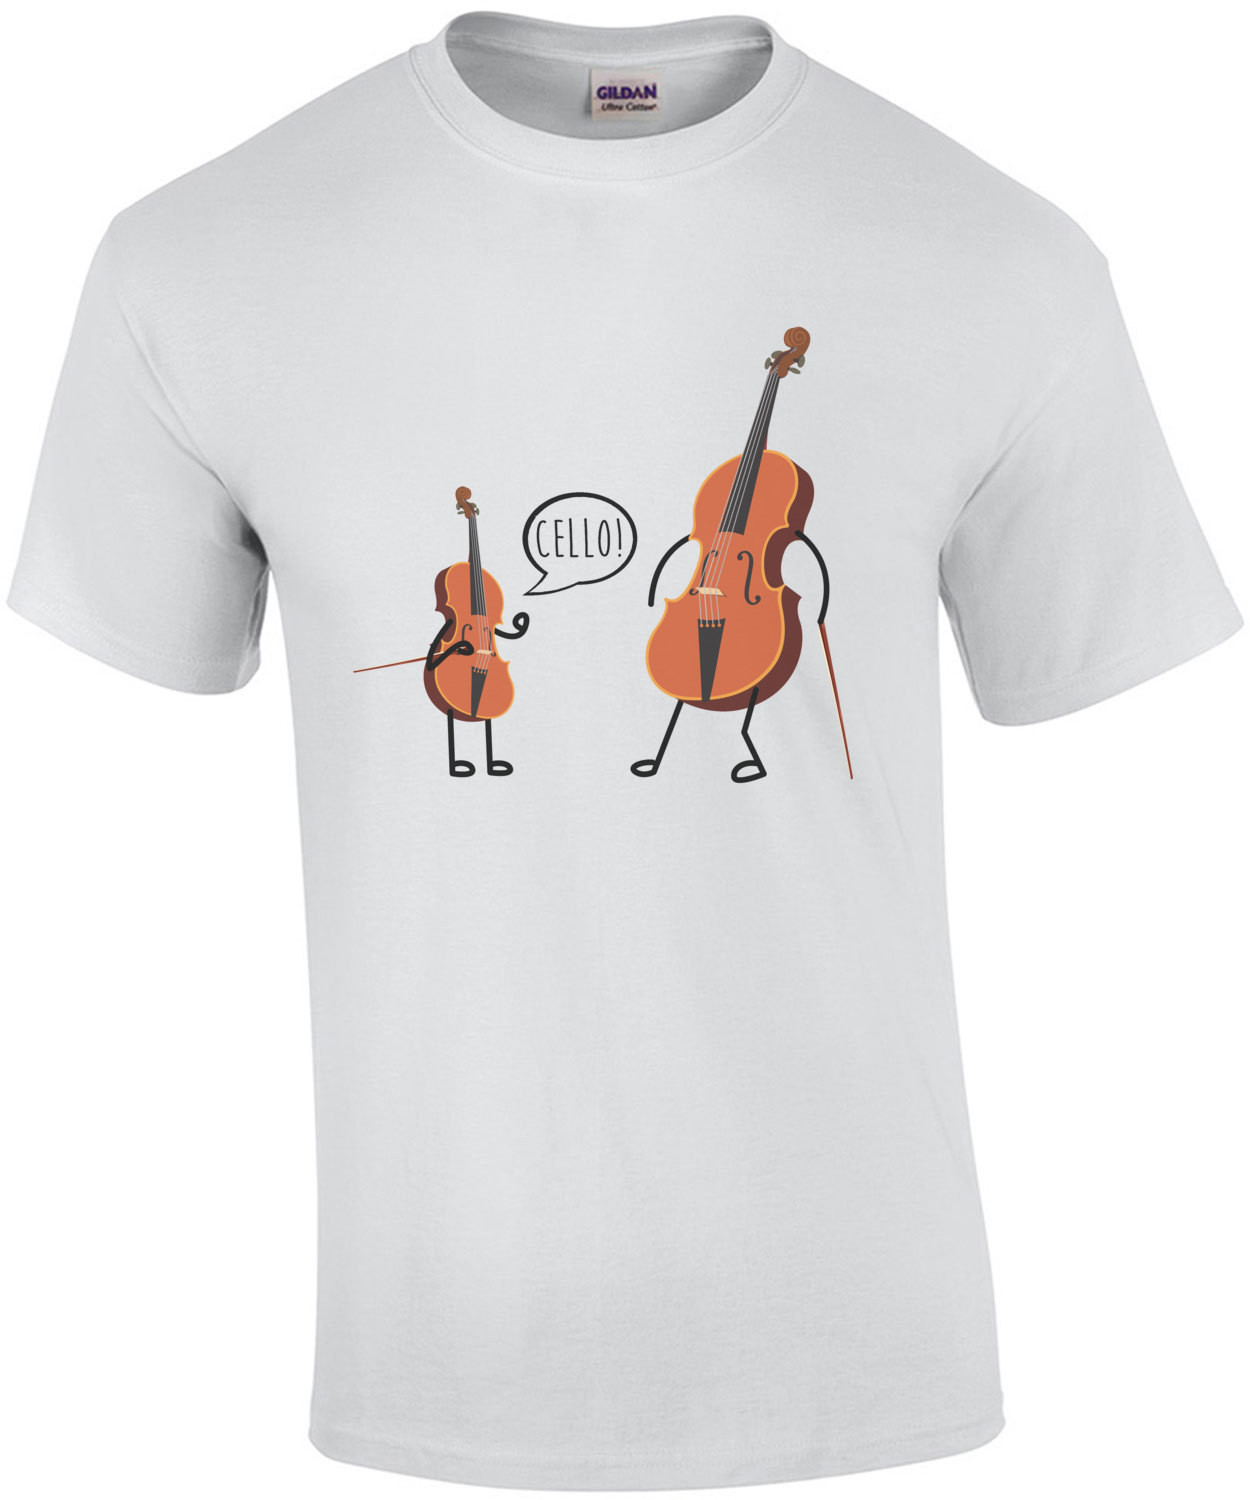 Cello! Funny musician t-shirt